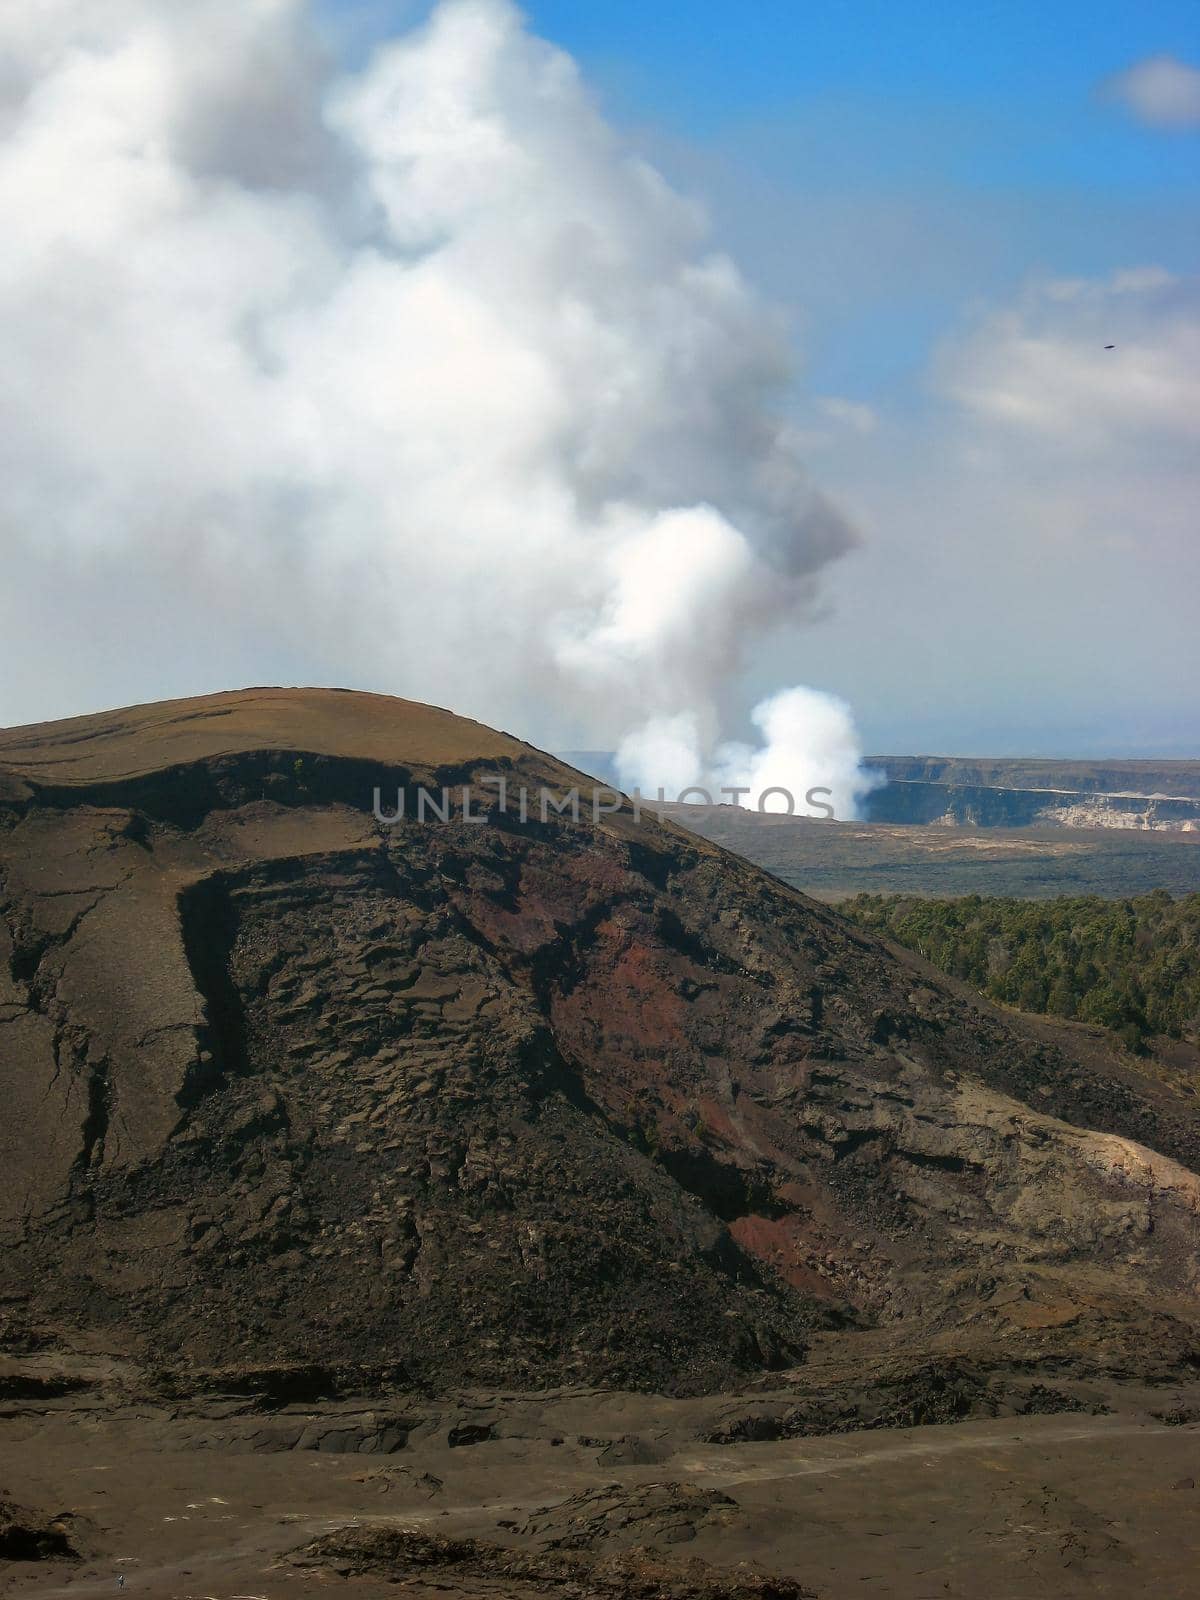 Smoking Crater of Halemaumau Kilauea Volcano in Hawaii Volcanoes National Park on Big Island by markvandam